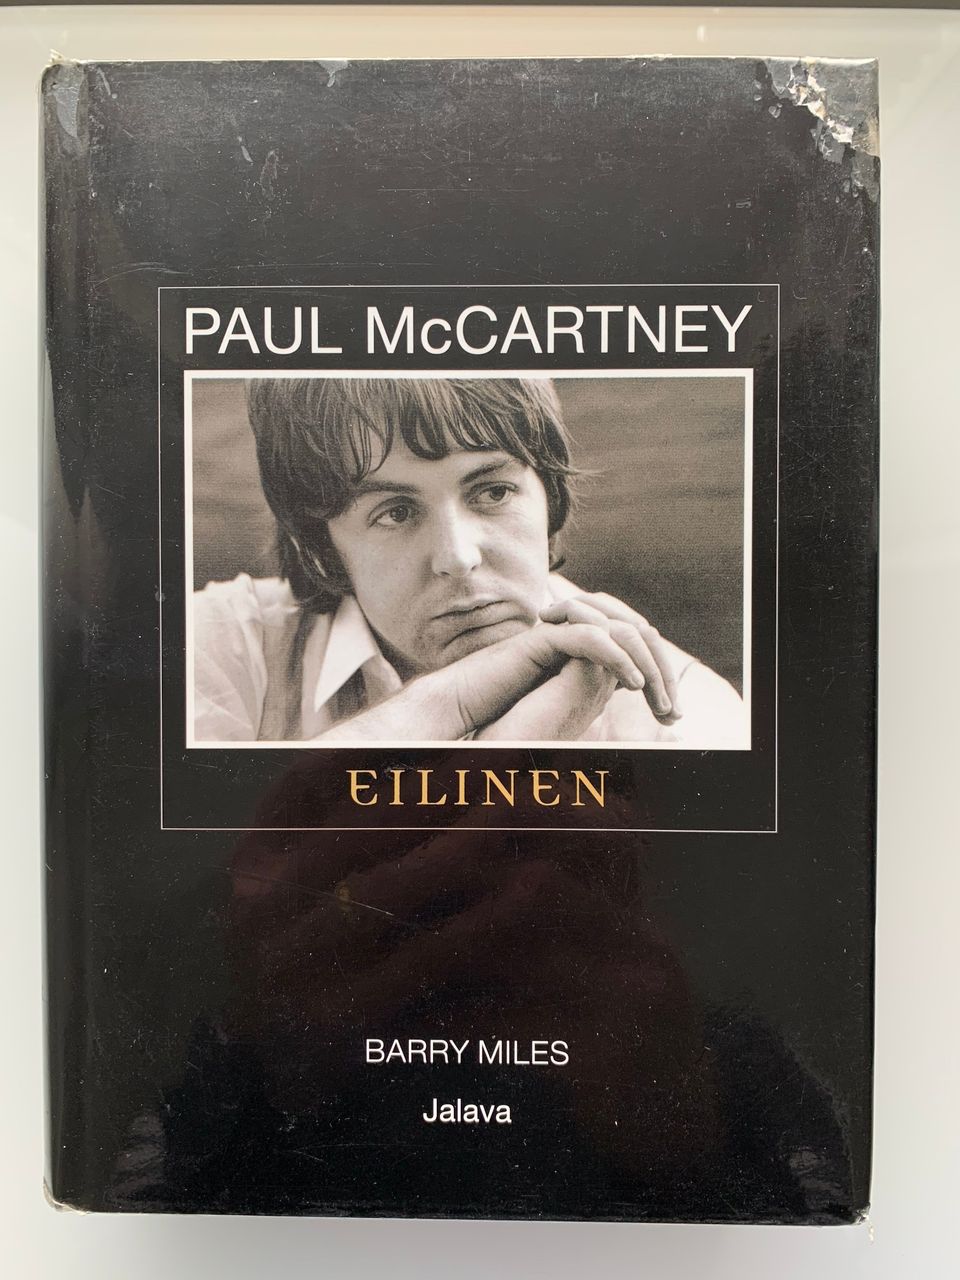 Barry Miles : Paul McCartney - Eilinen